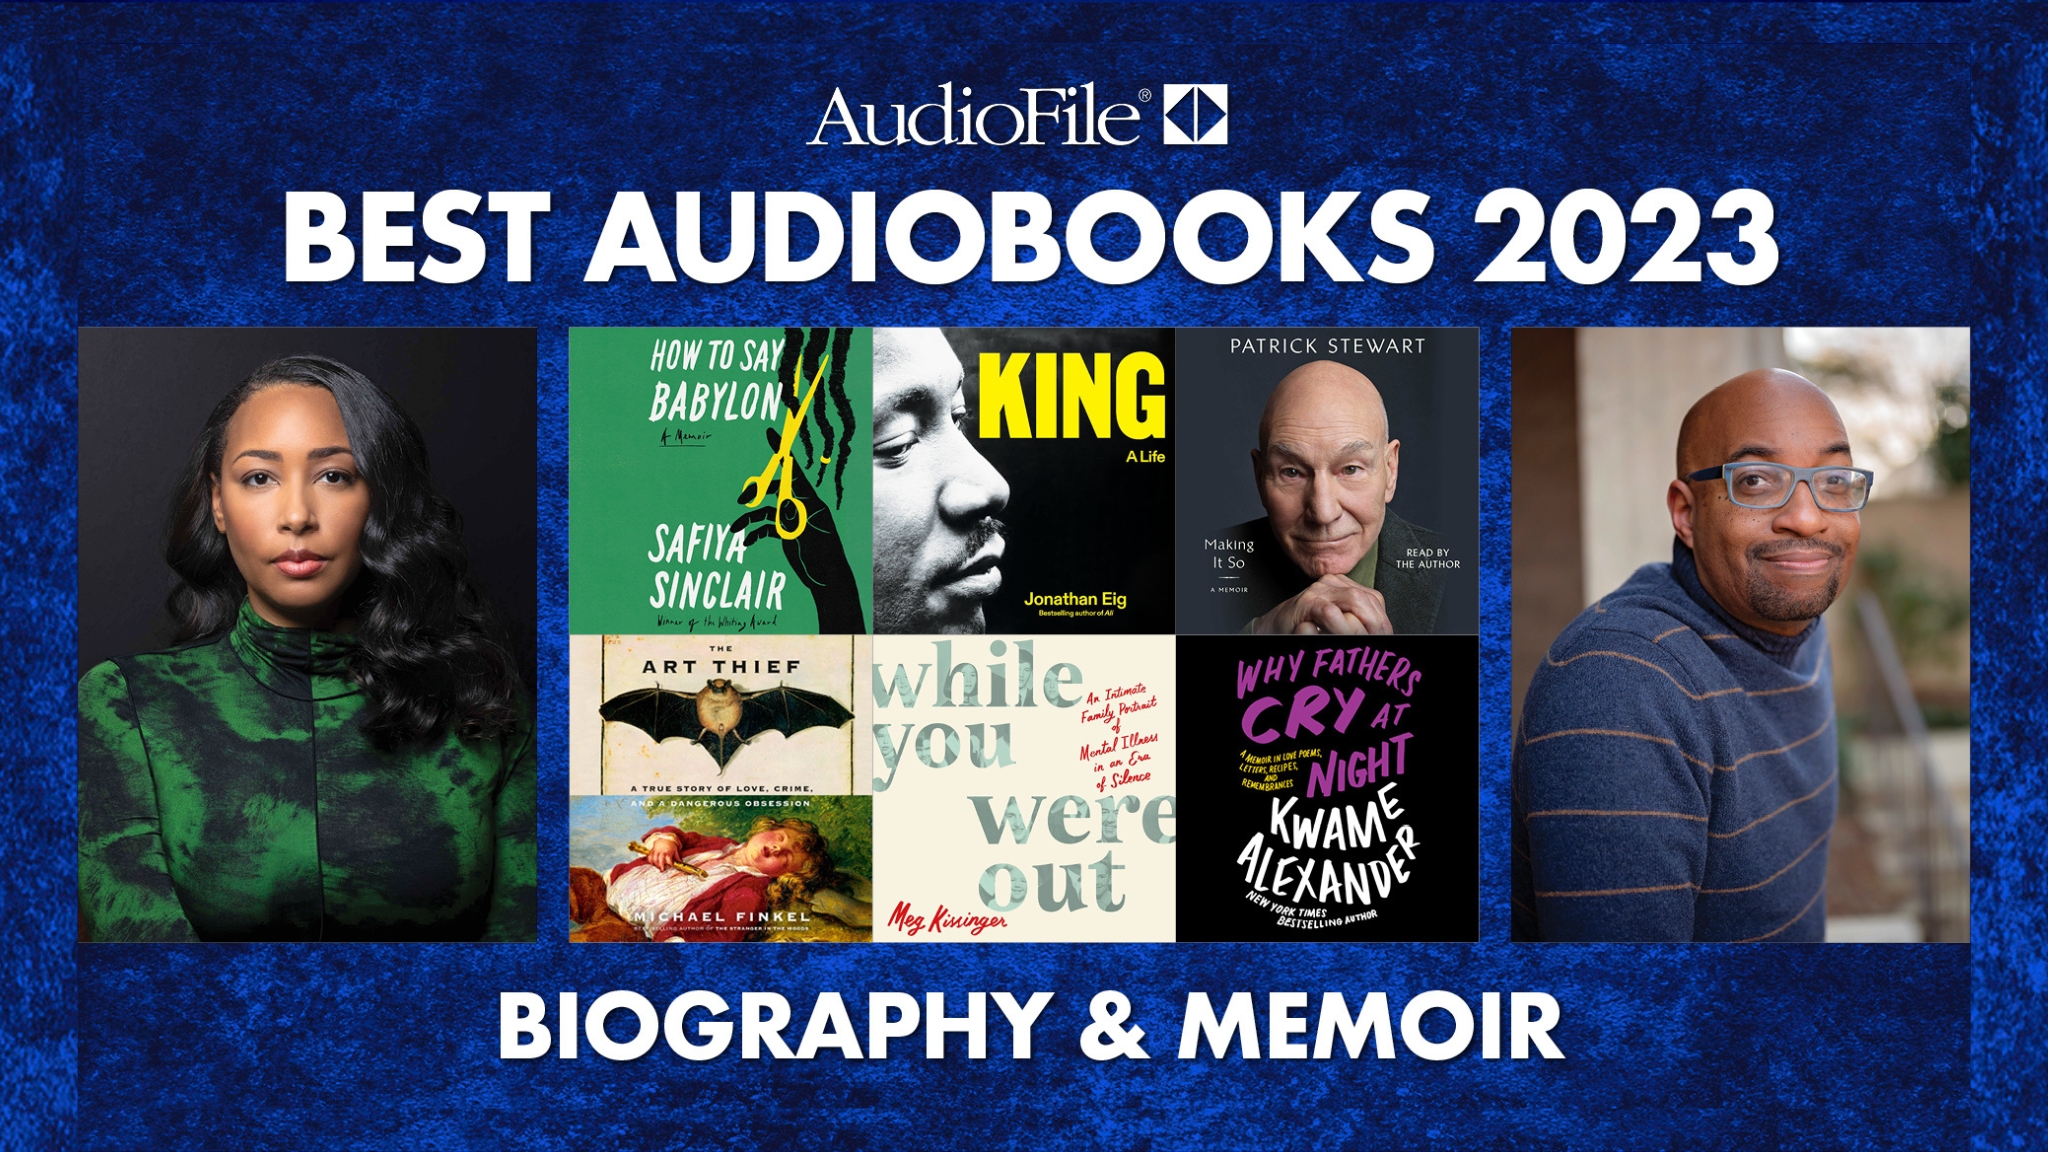 Audiofile Best Audiobooks 2023 BookTrib